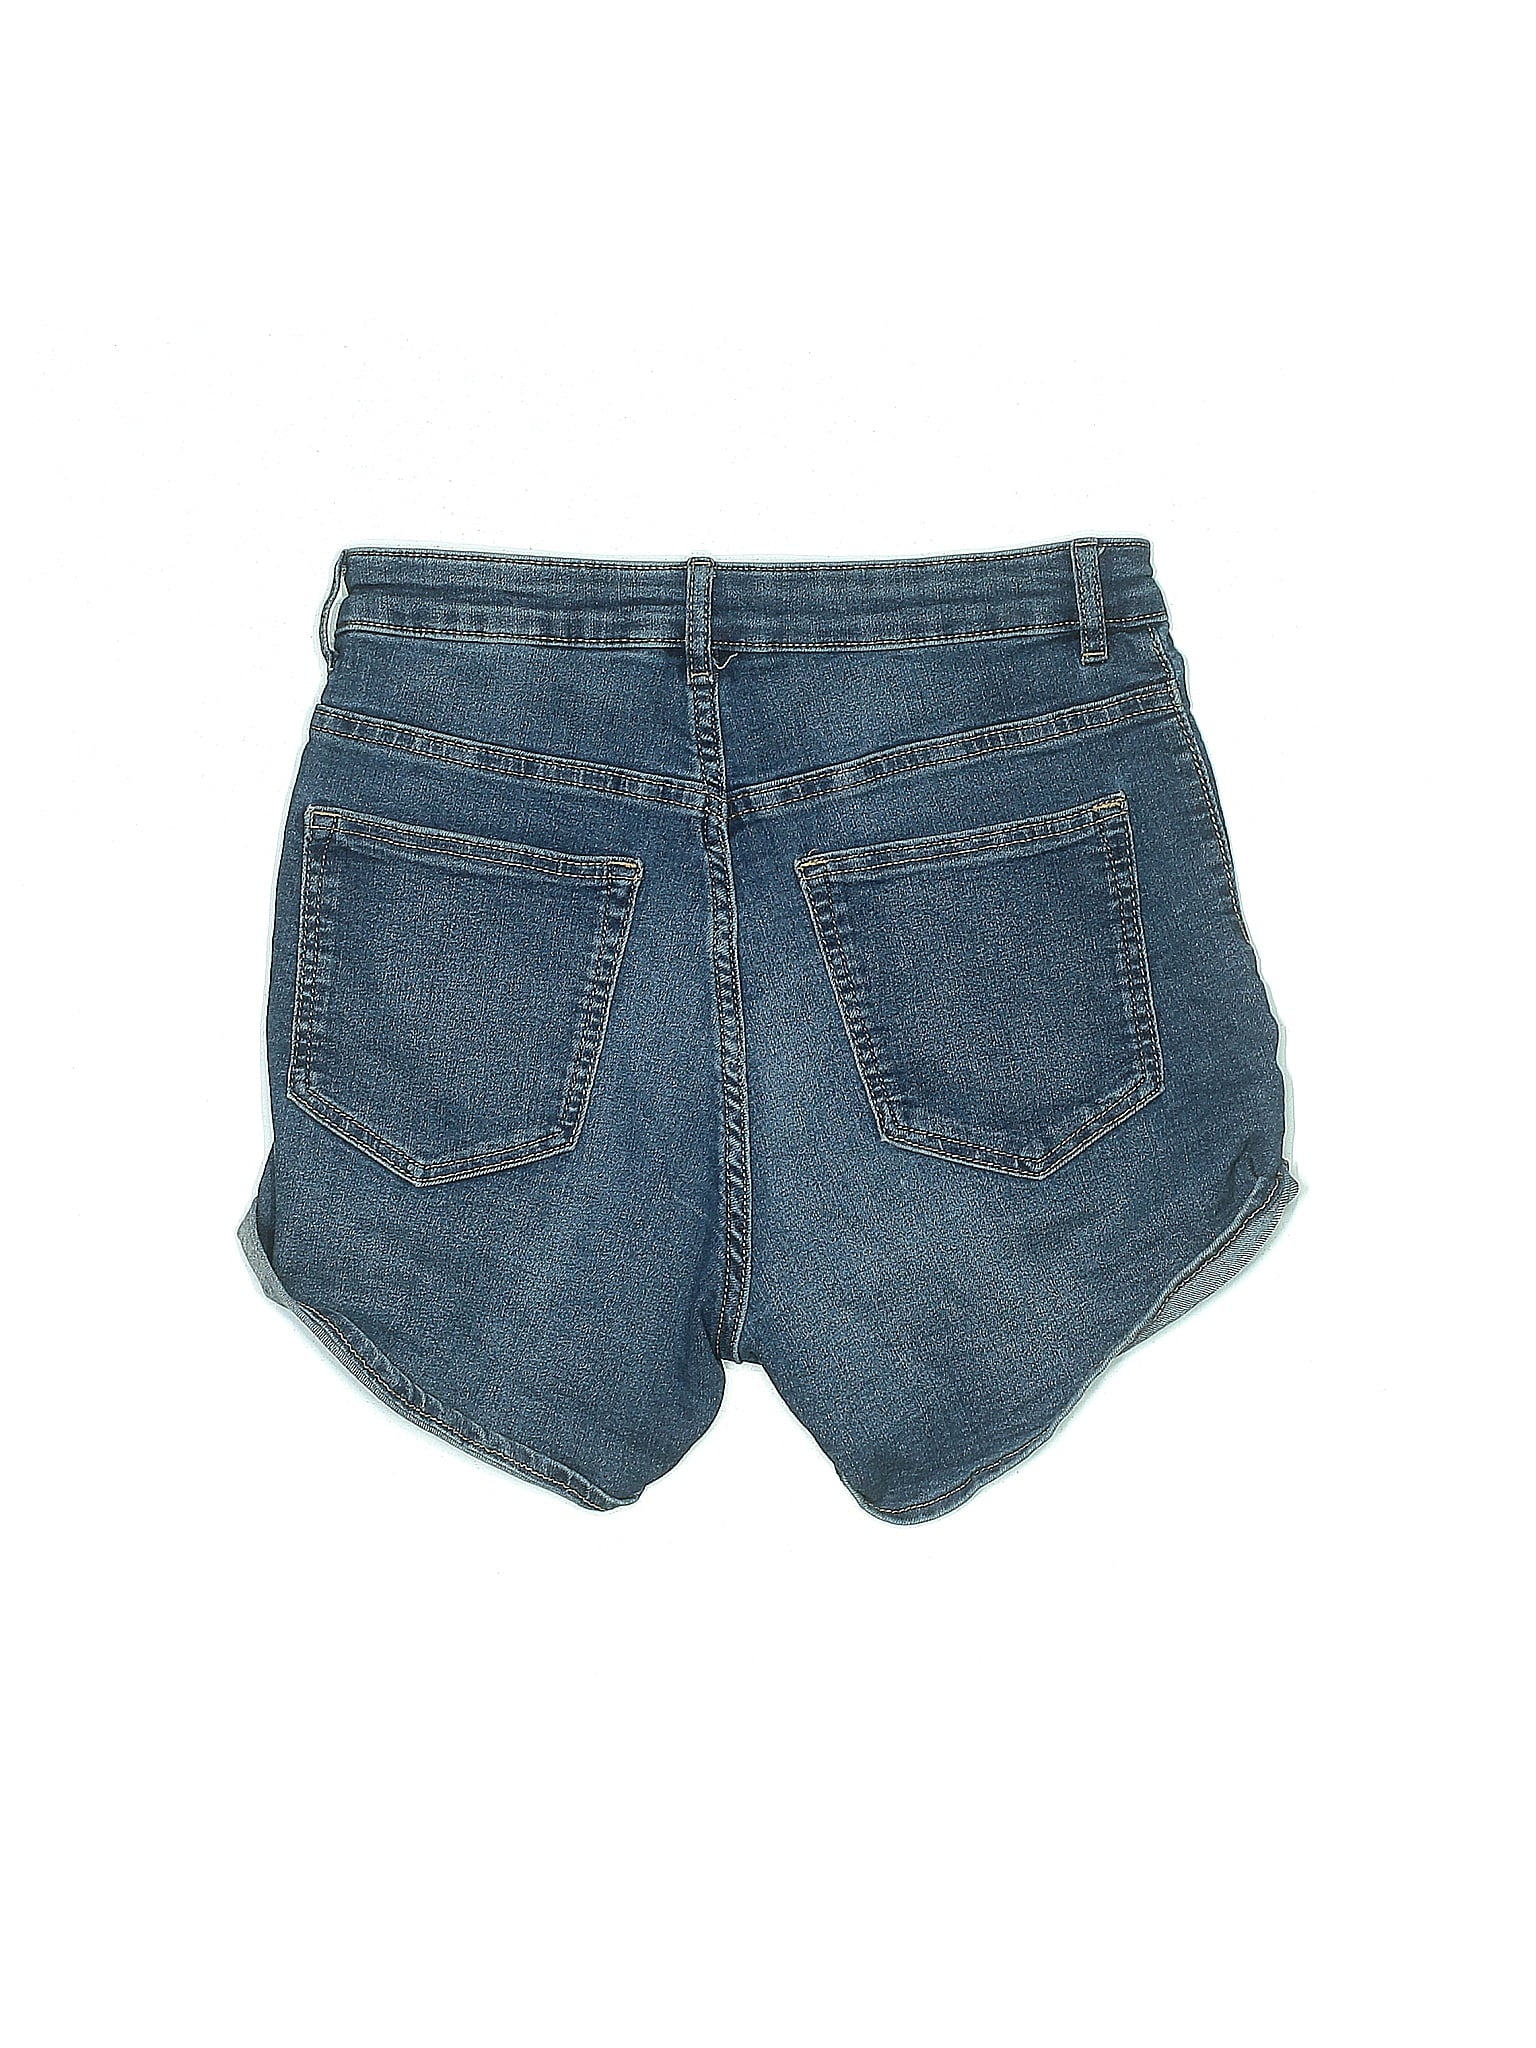 Denim Shorts size - 6